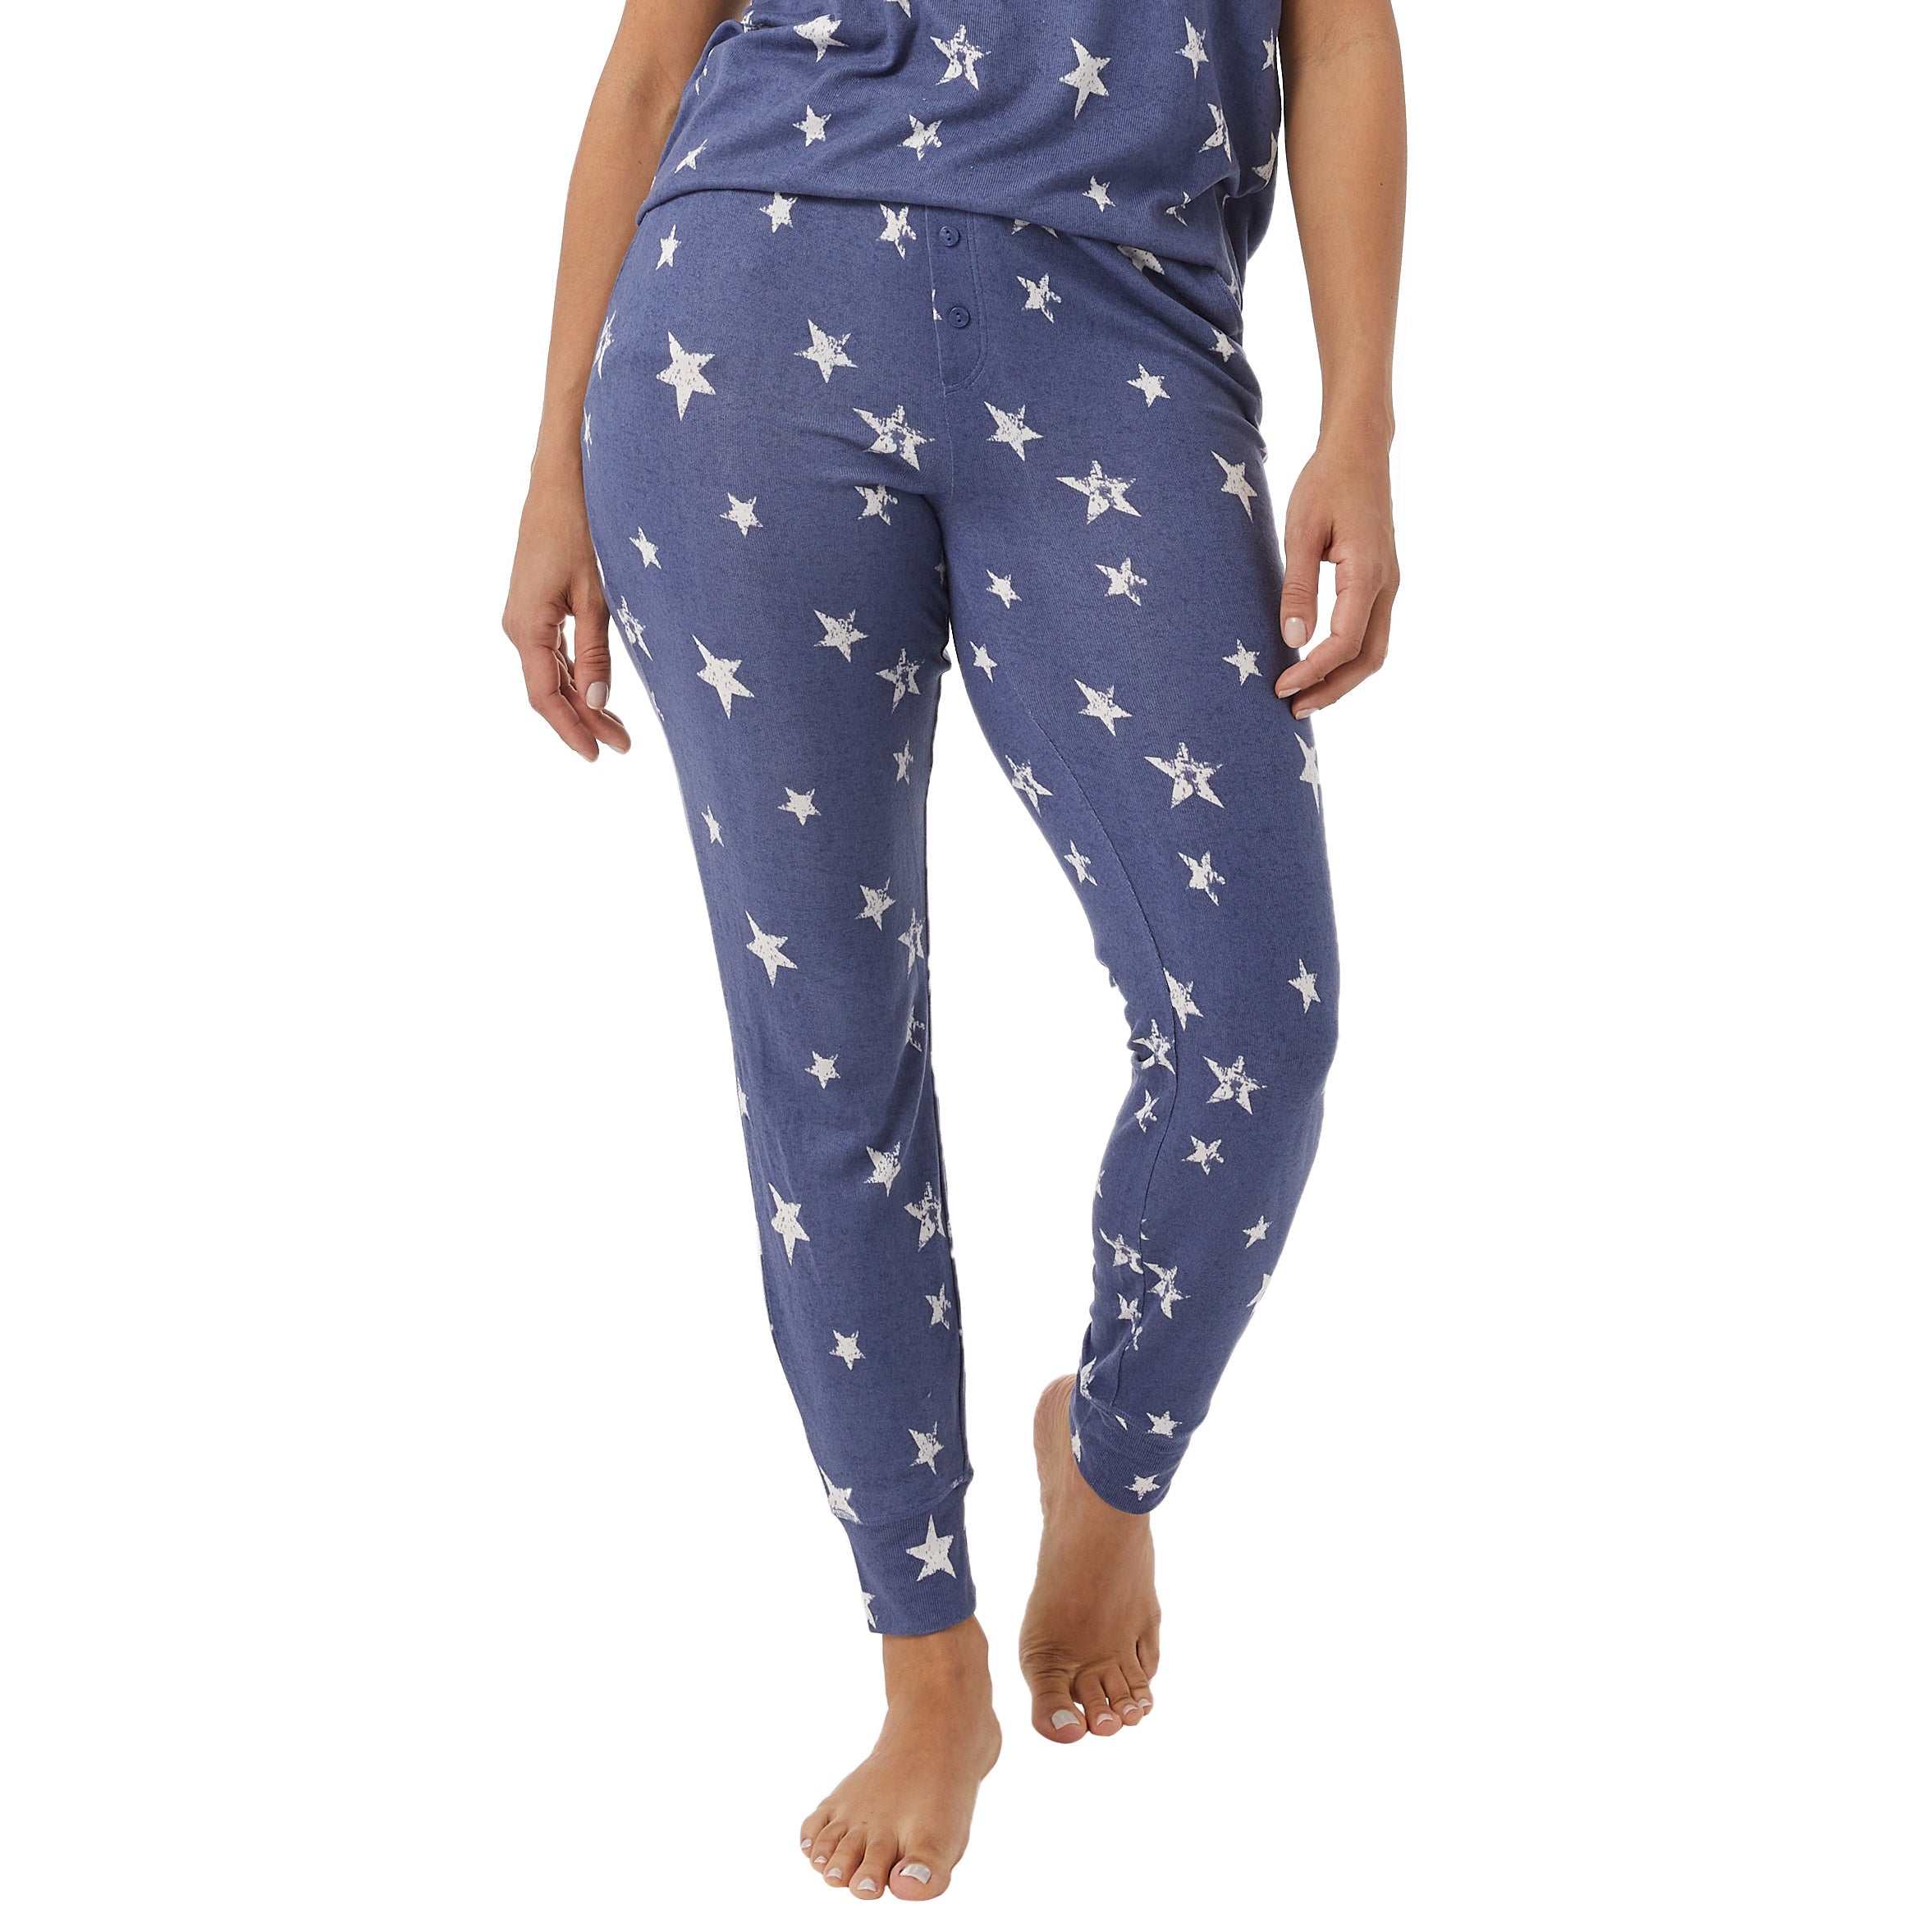 32 Degrees Cool Women's 2 Pack Soft Sleep Lounge Pants (Heather  Purple/Heather Grey, X-Large)